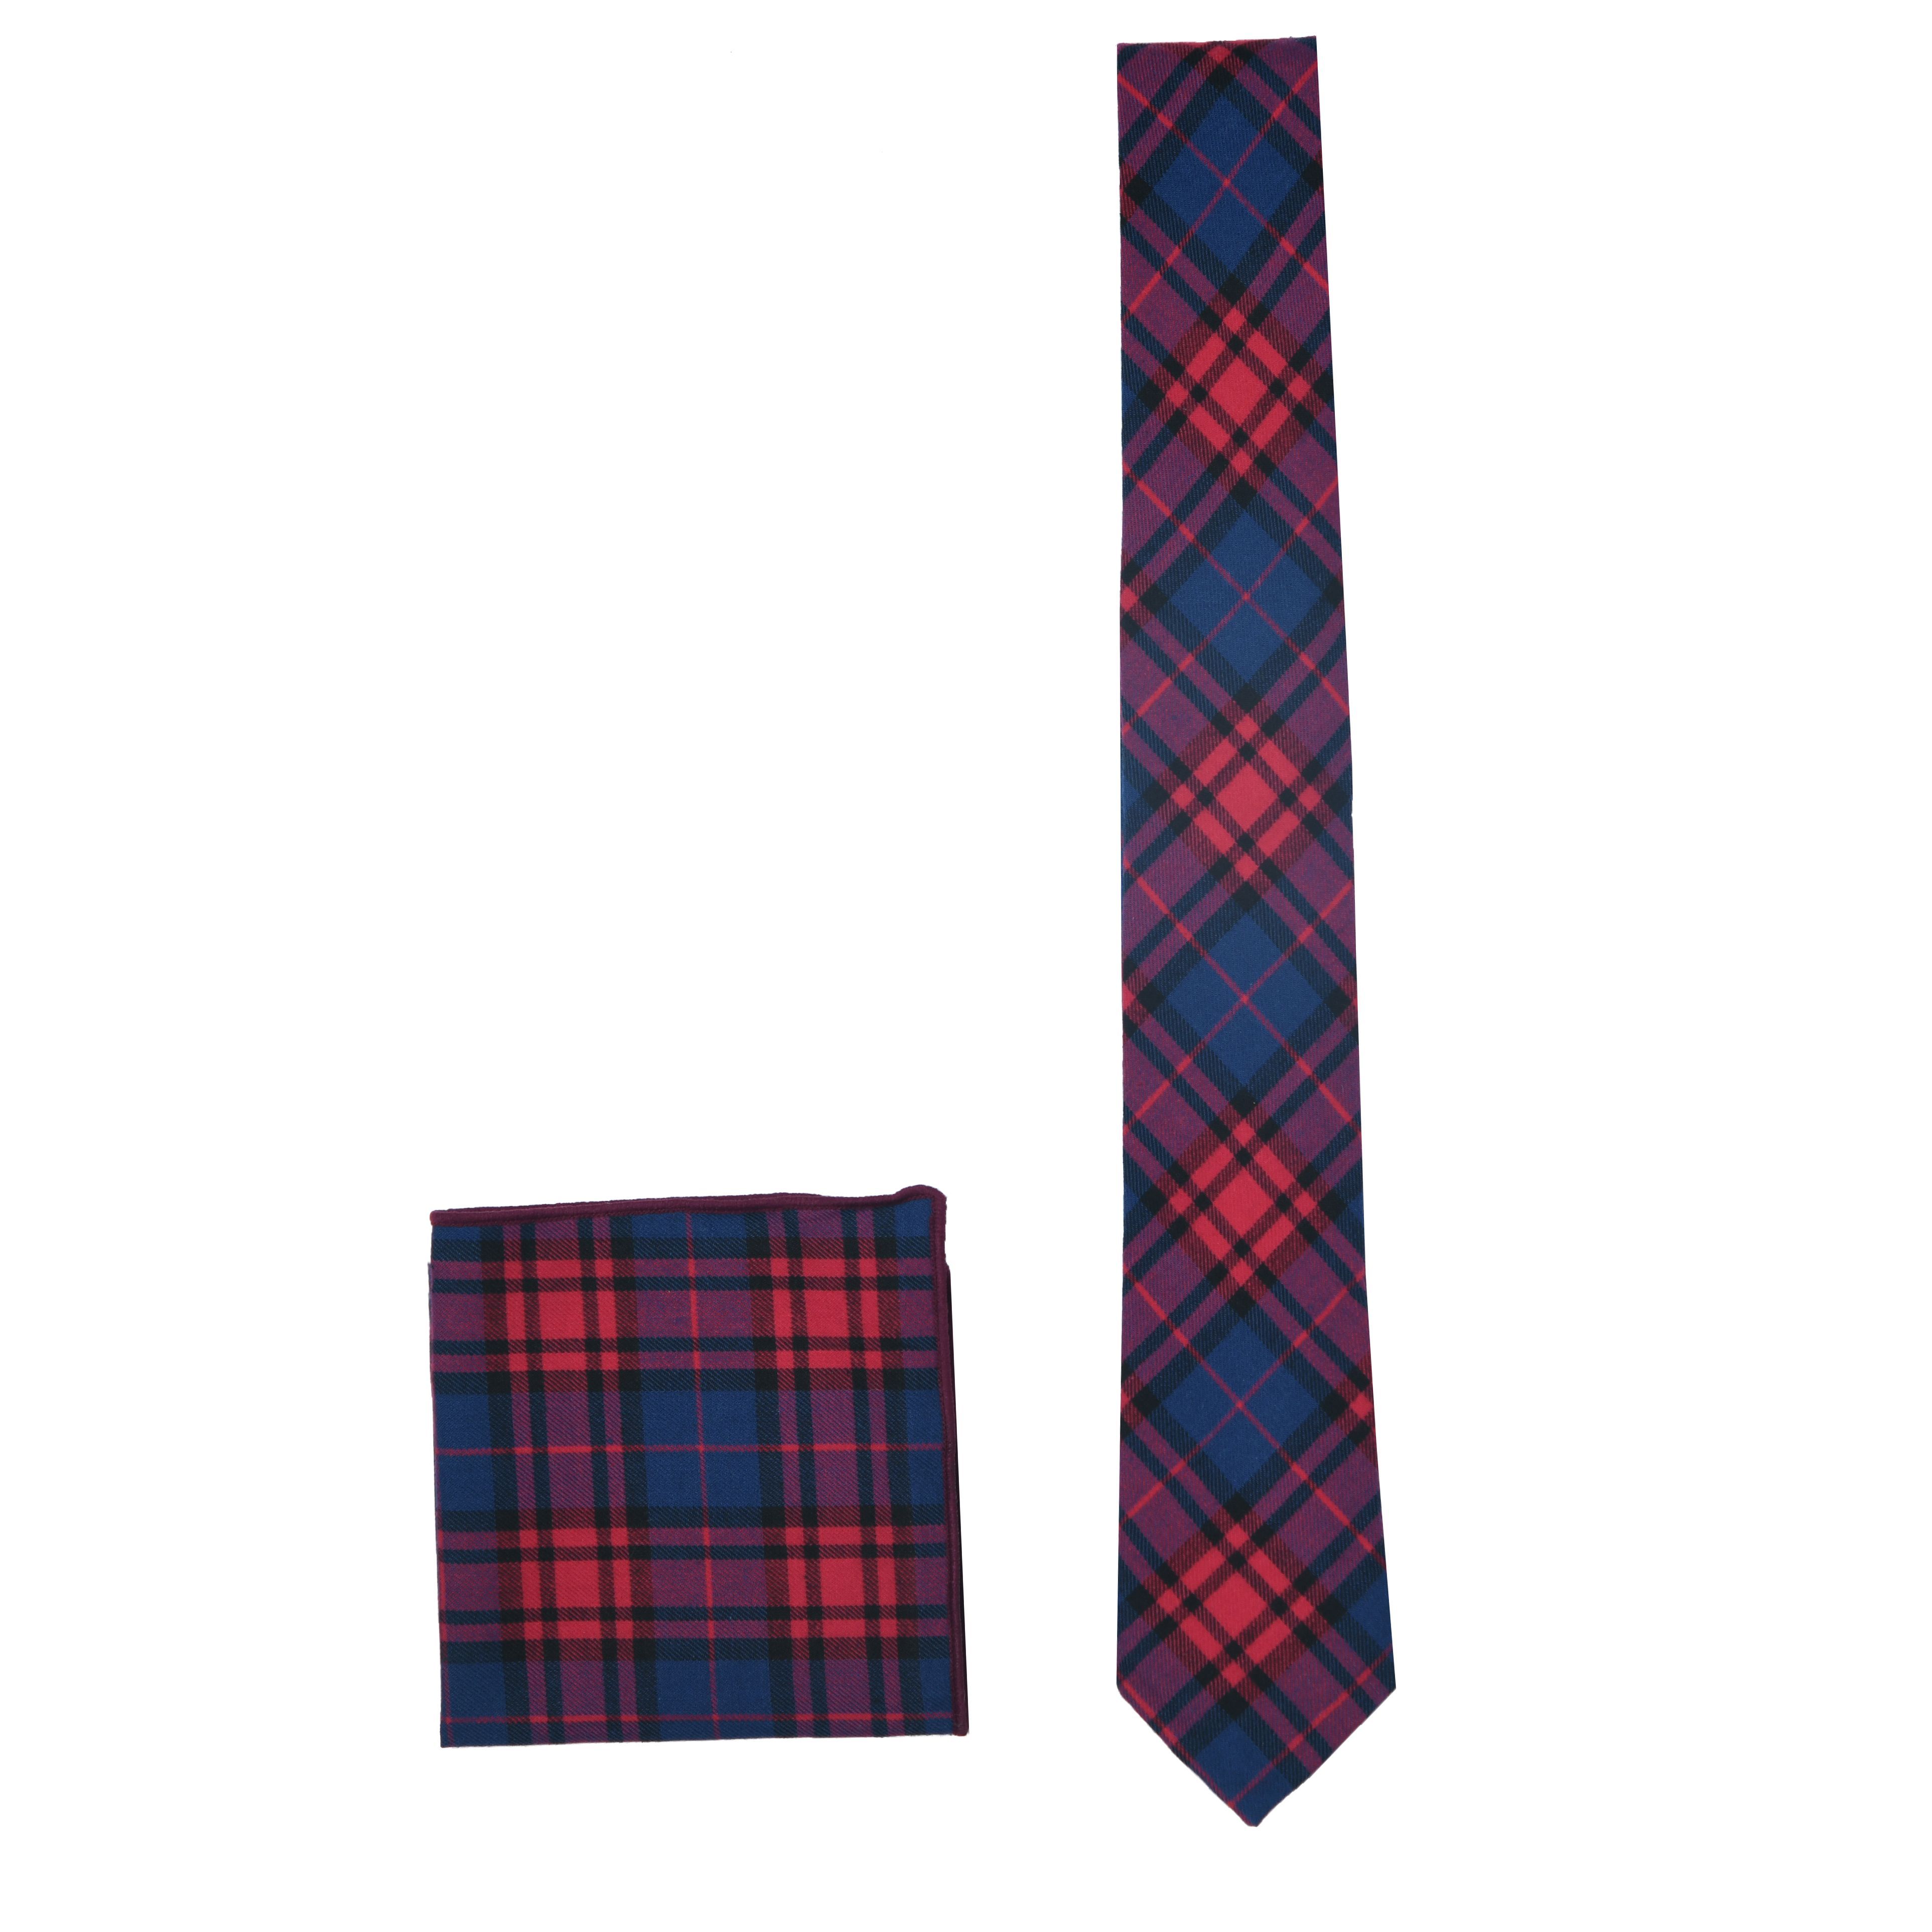 Toffcraft Chequered Neck Tie & Pocket Square - Red & Blue